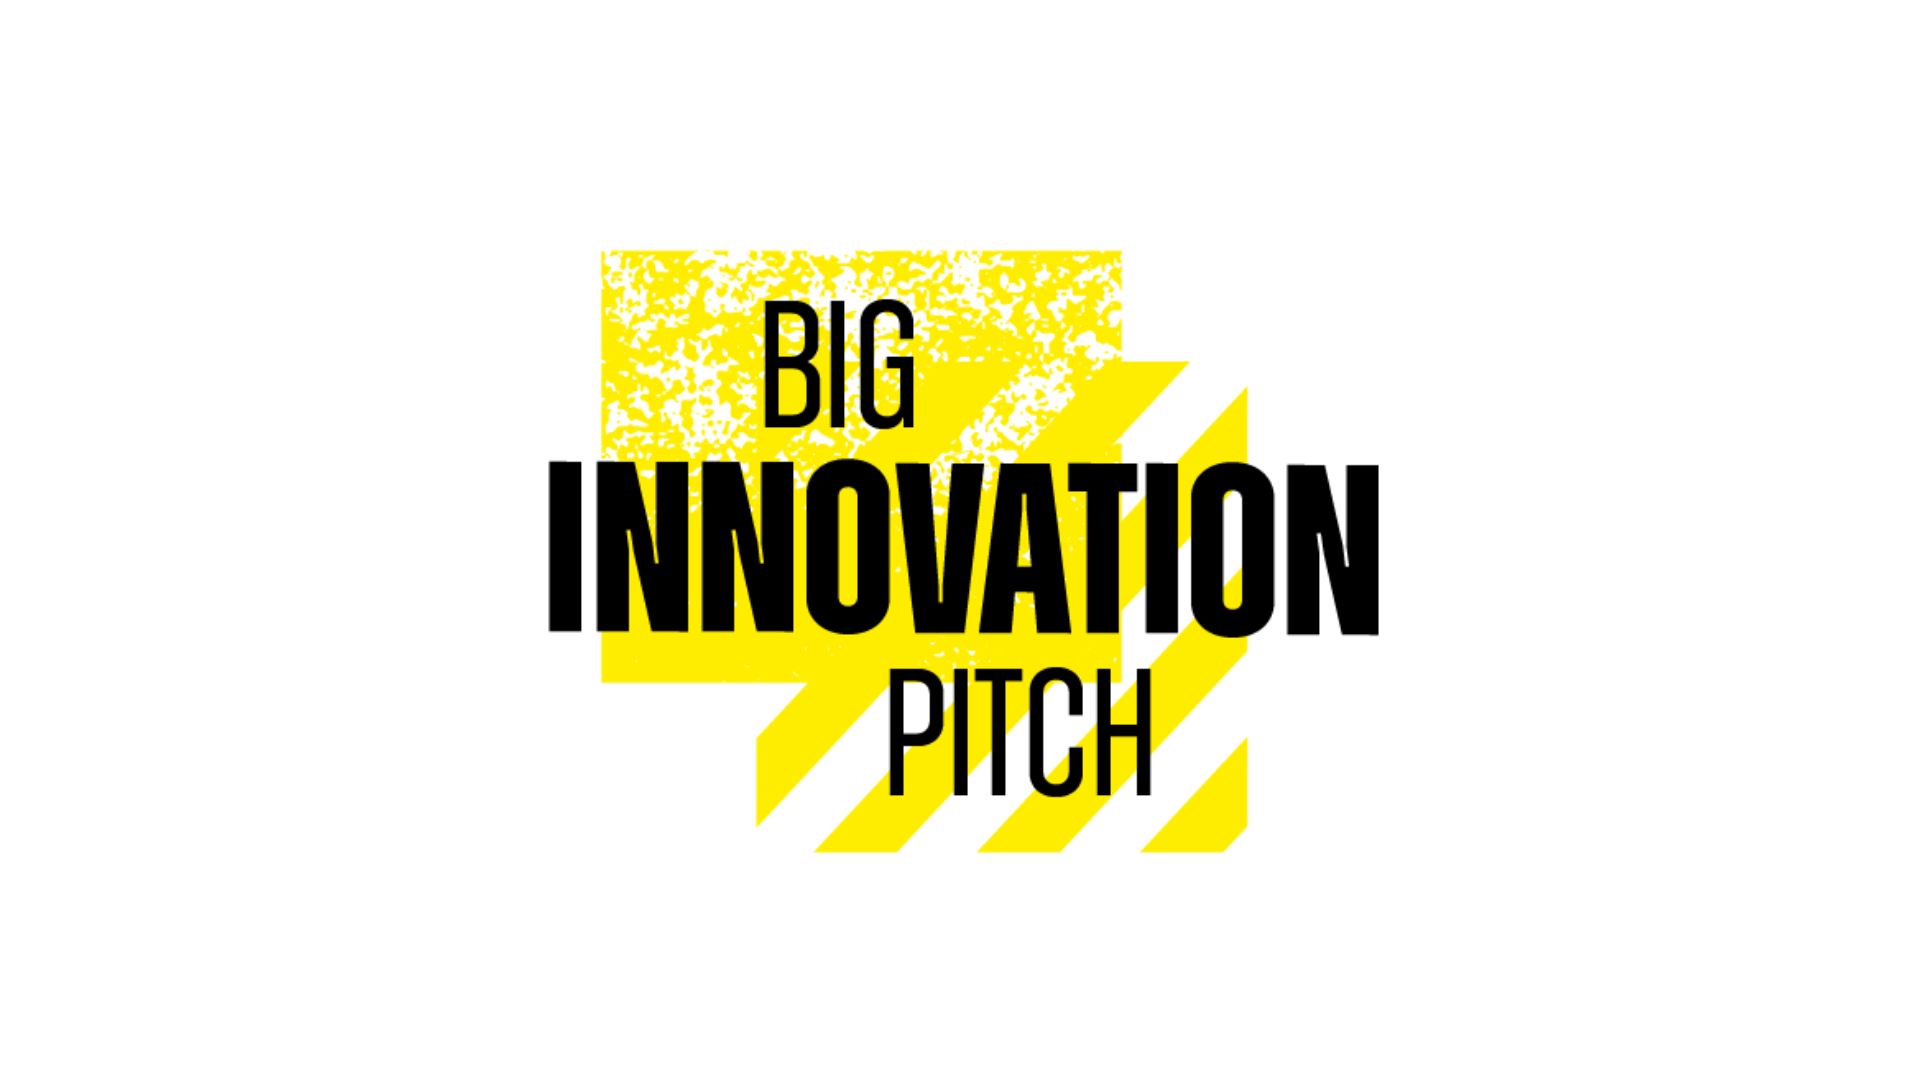 Big innovation pitch logo.png